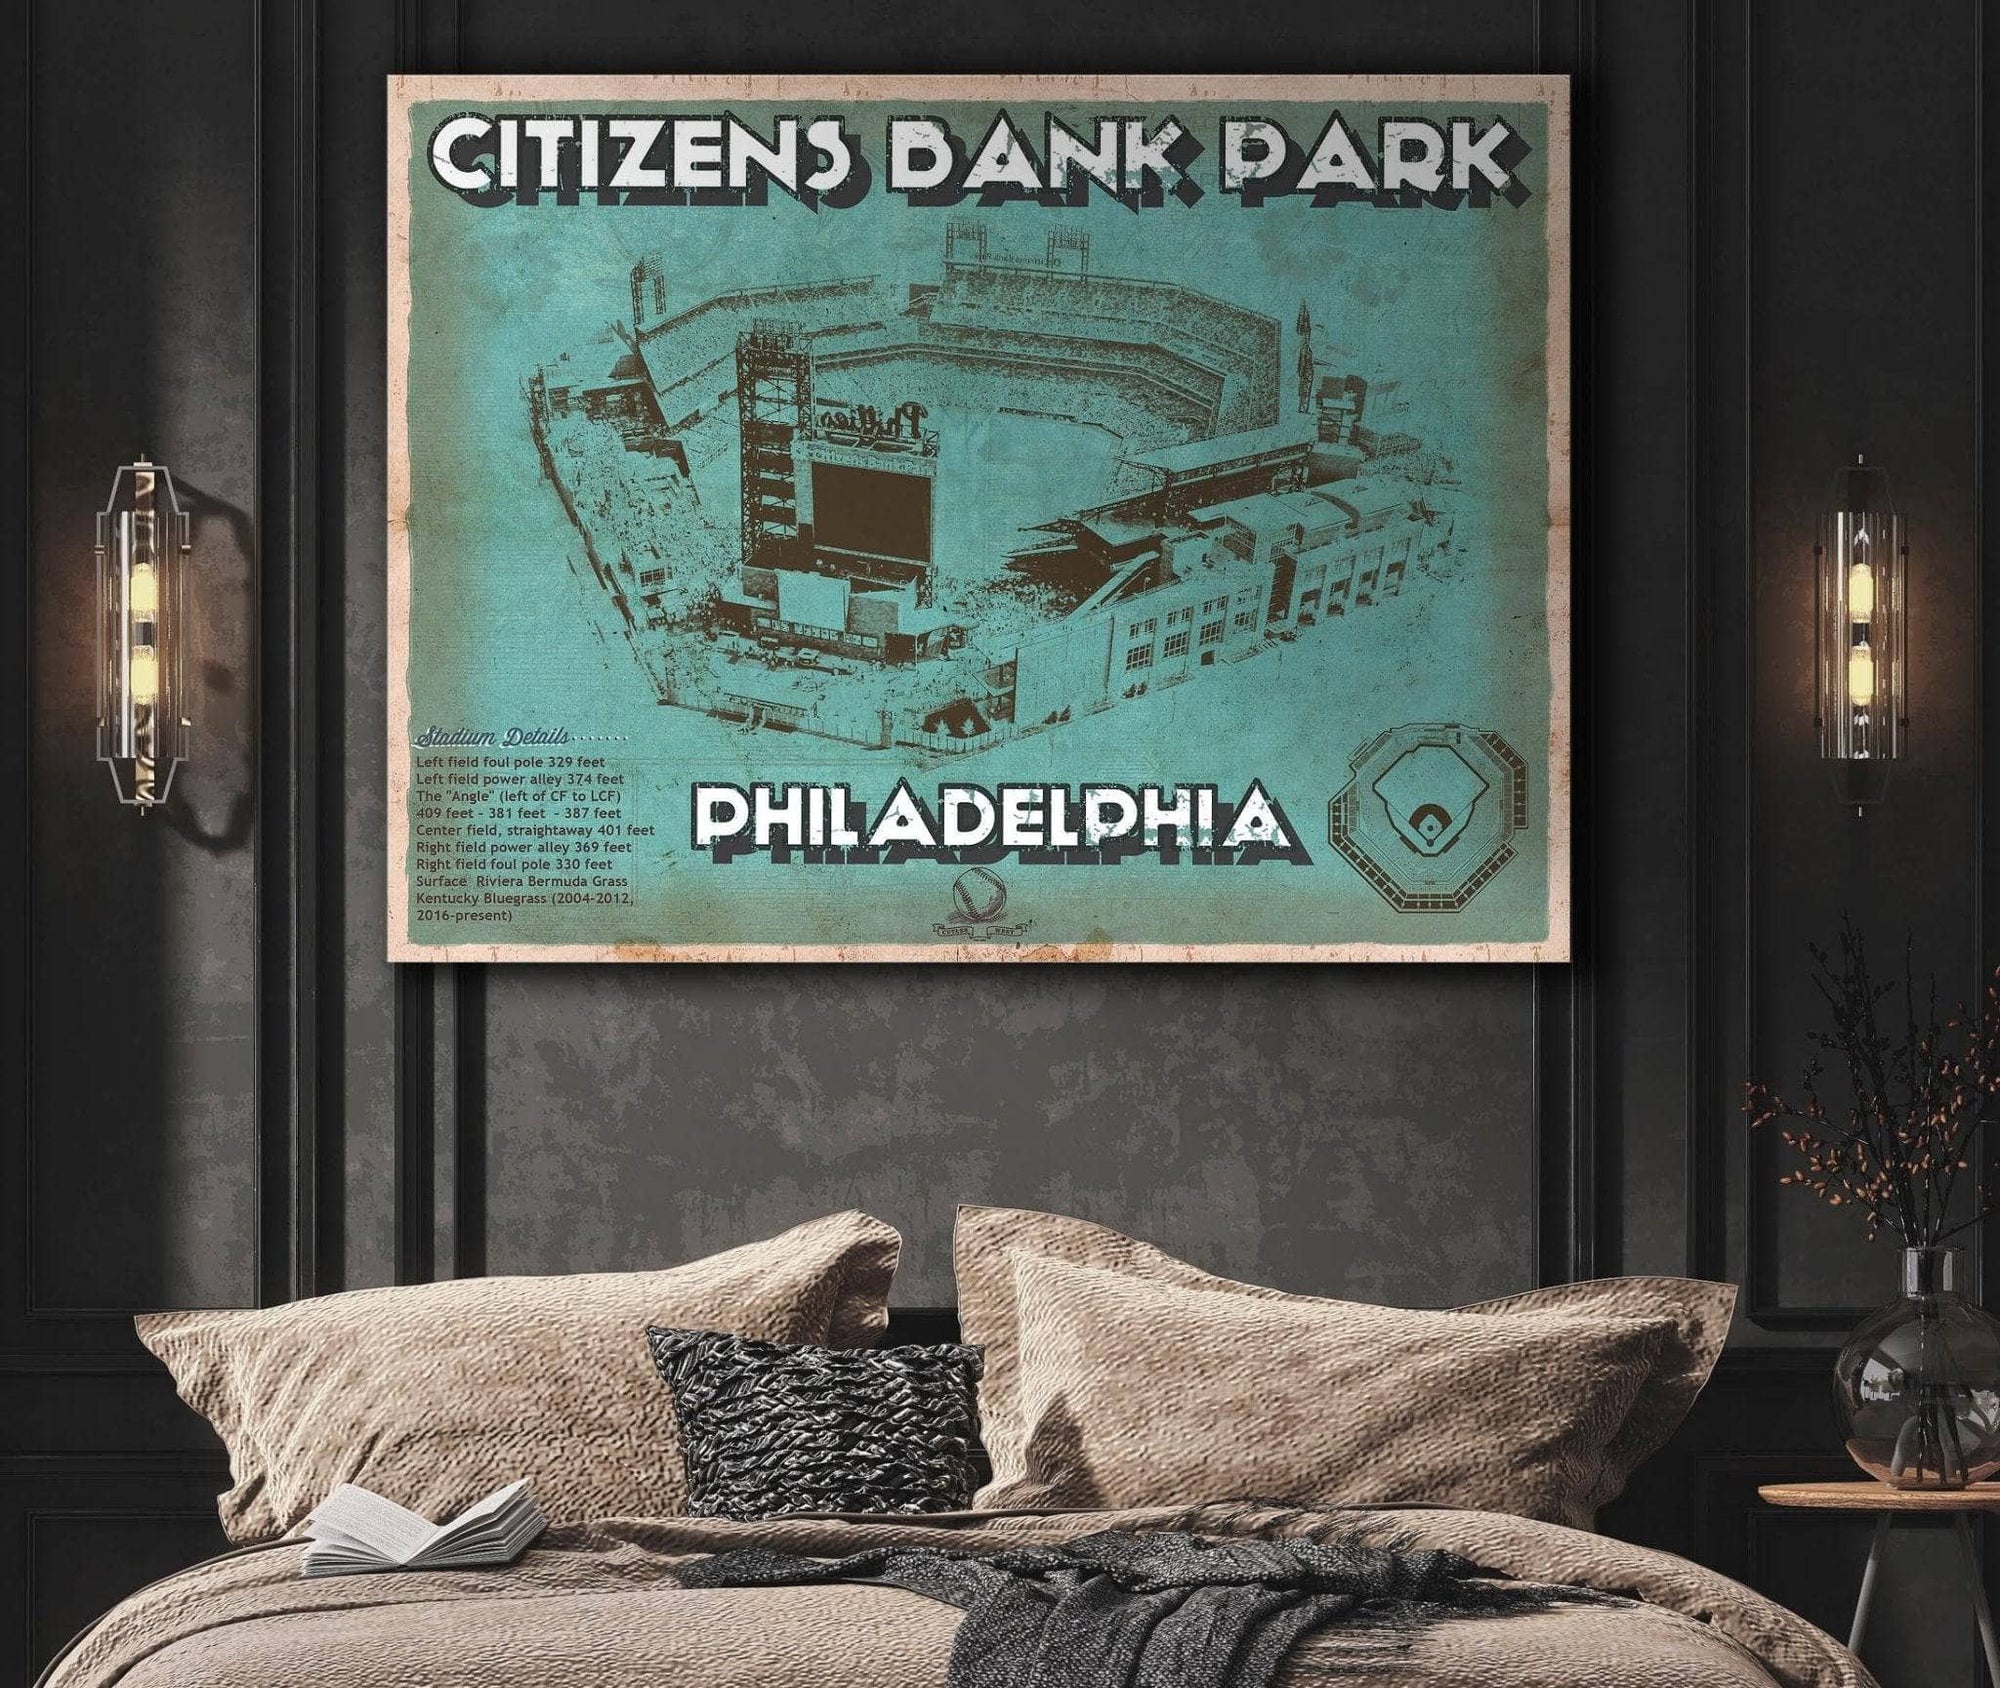 Cutler West Baseball Collection Philadelphia Phillies - Citizens Bank Park Vintage Baseball Print